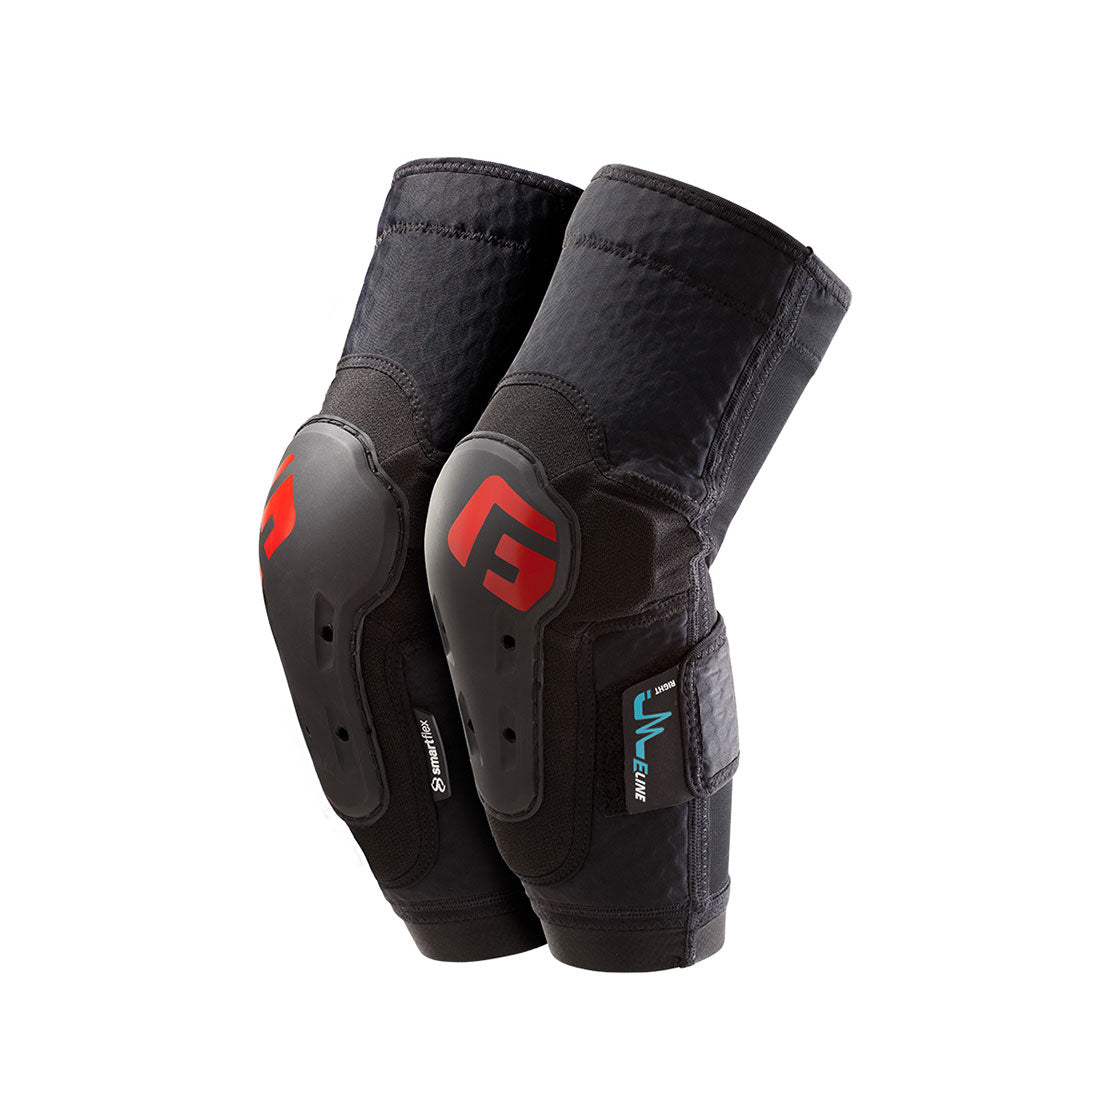 G-Form E-Line Elbow Protective Gear